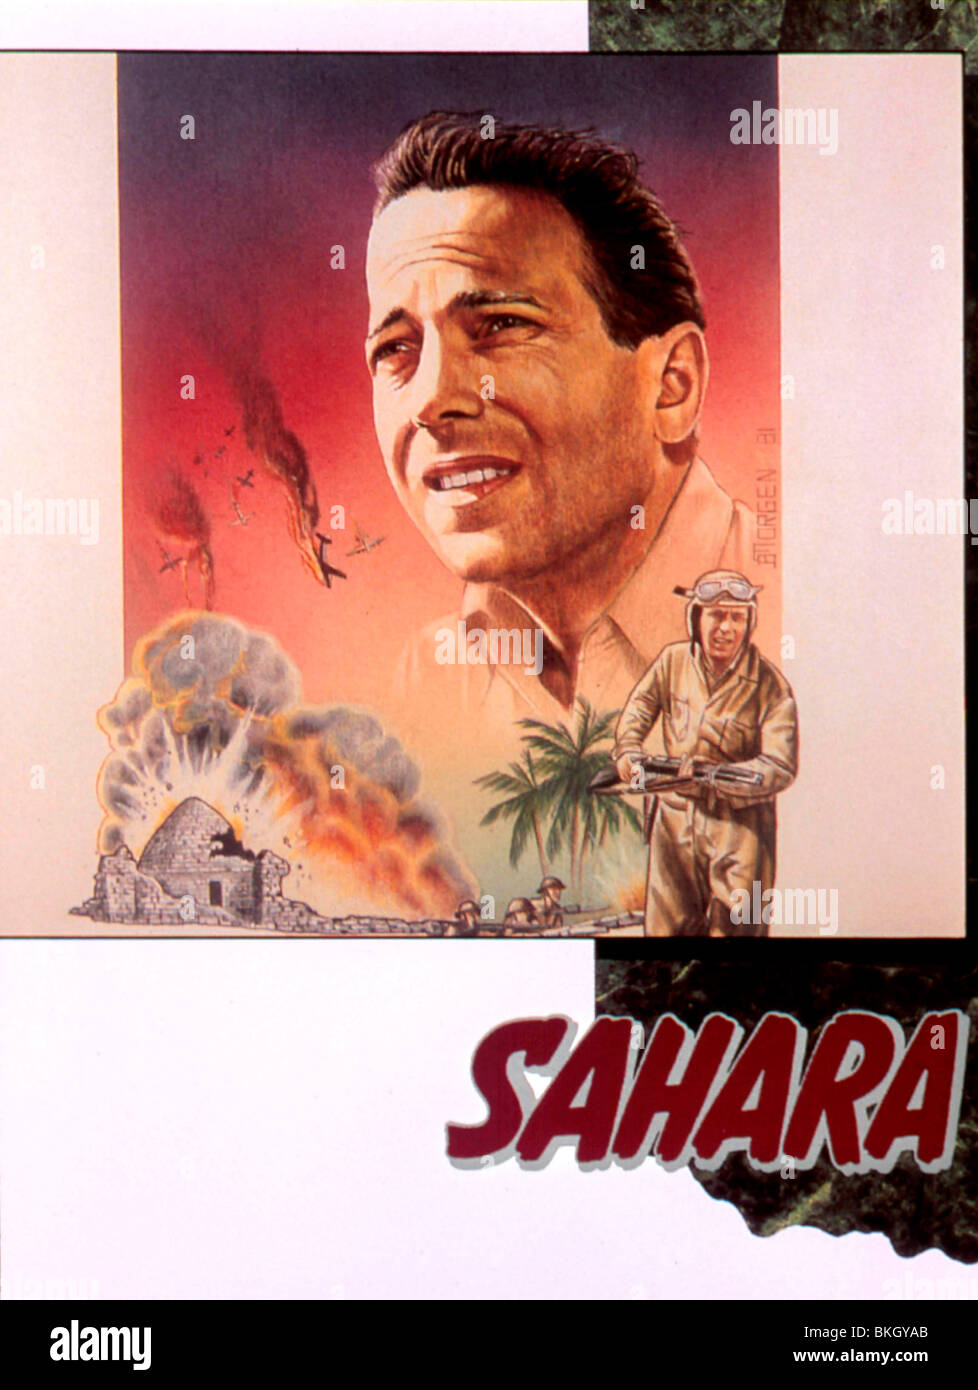 SAHARA-1943 POSTER Stockfoto